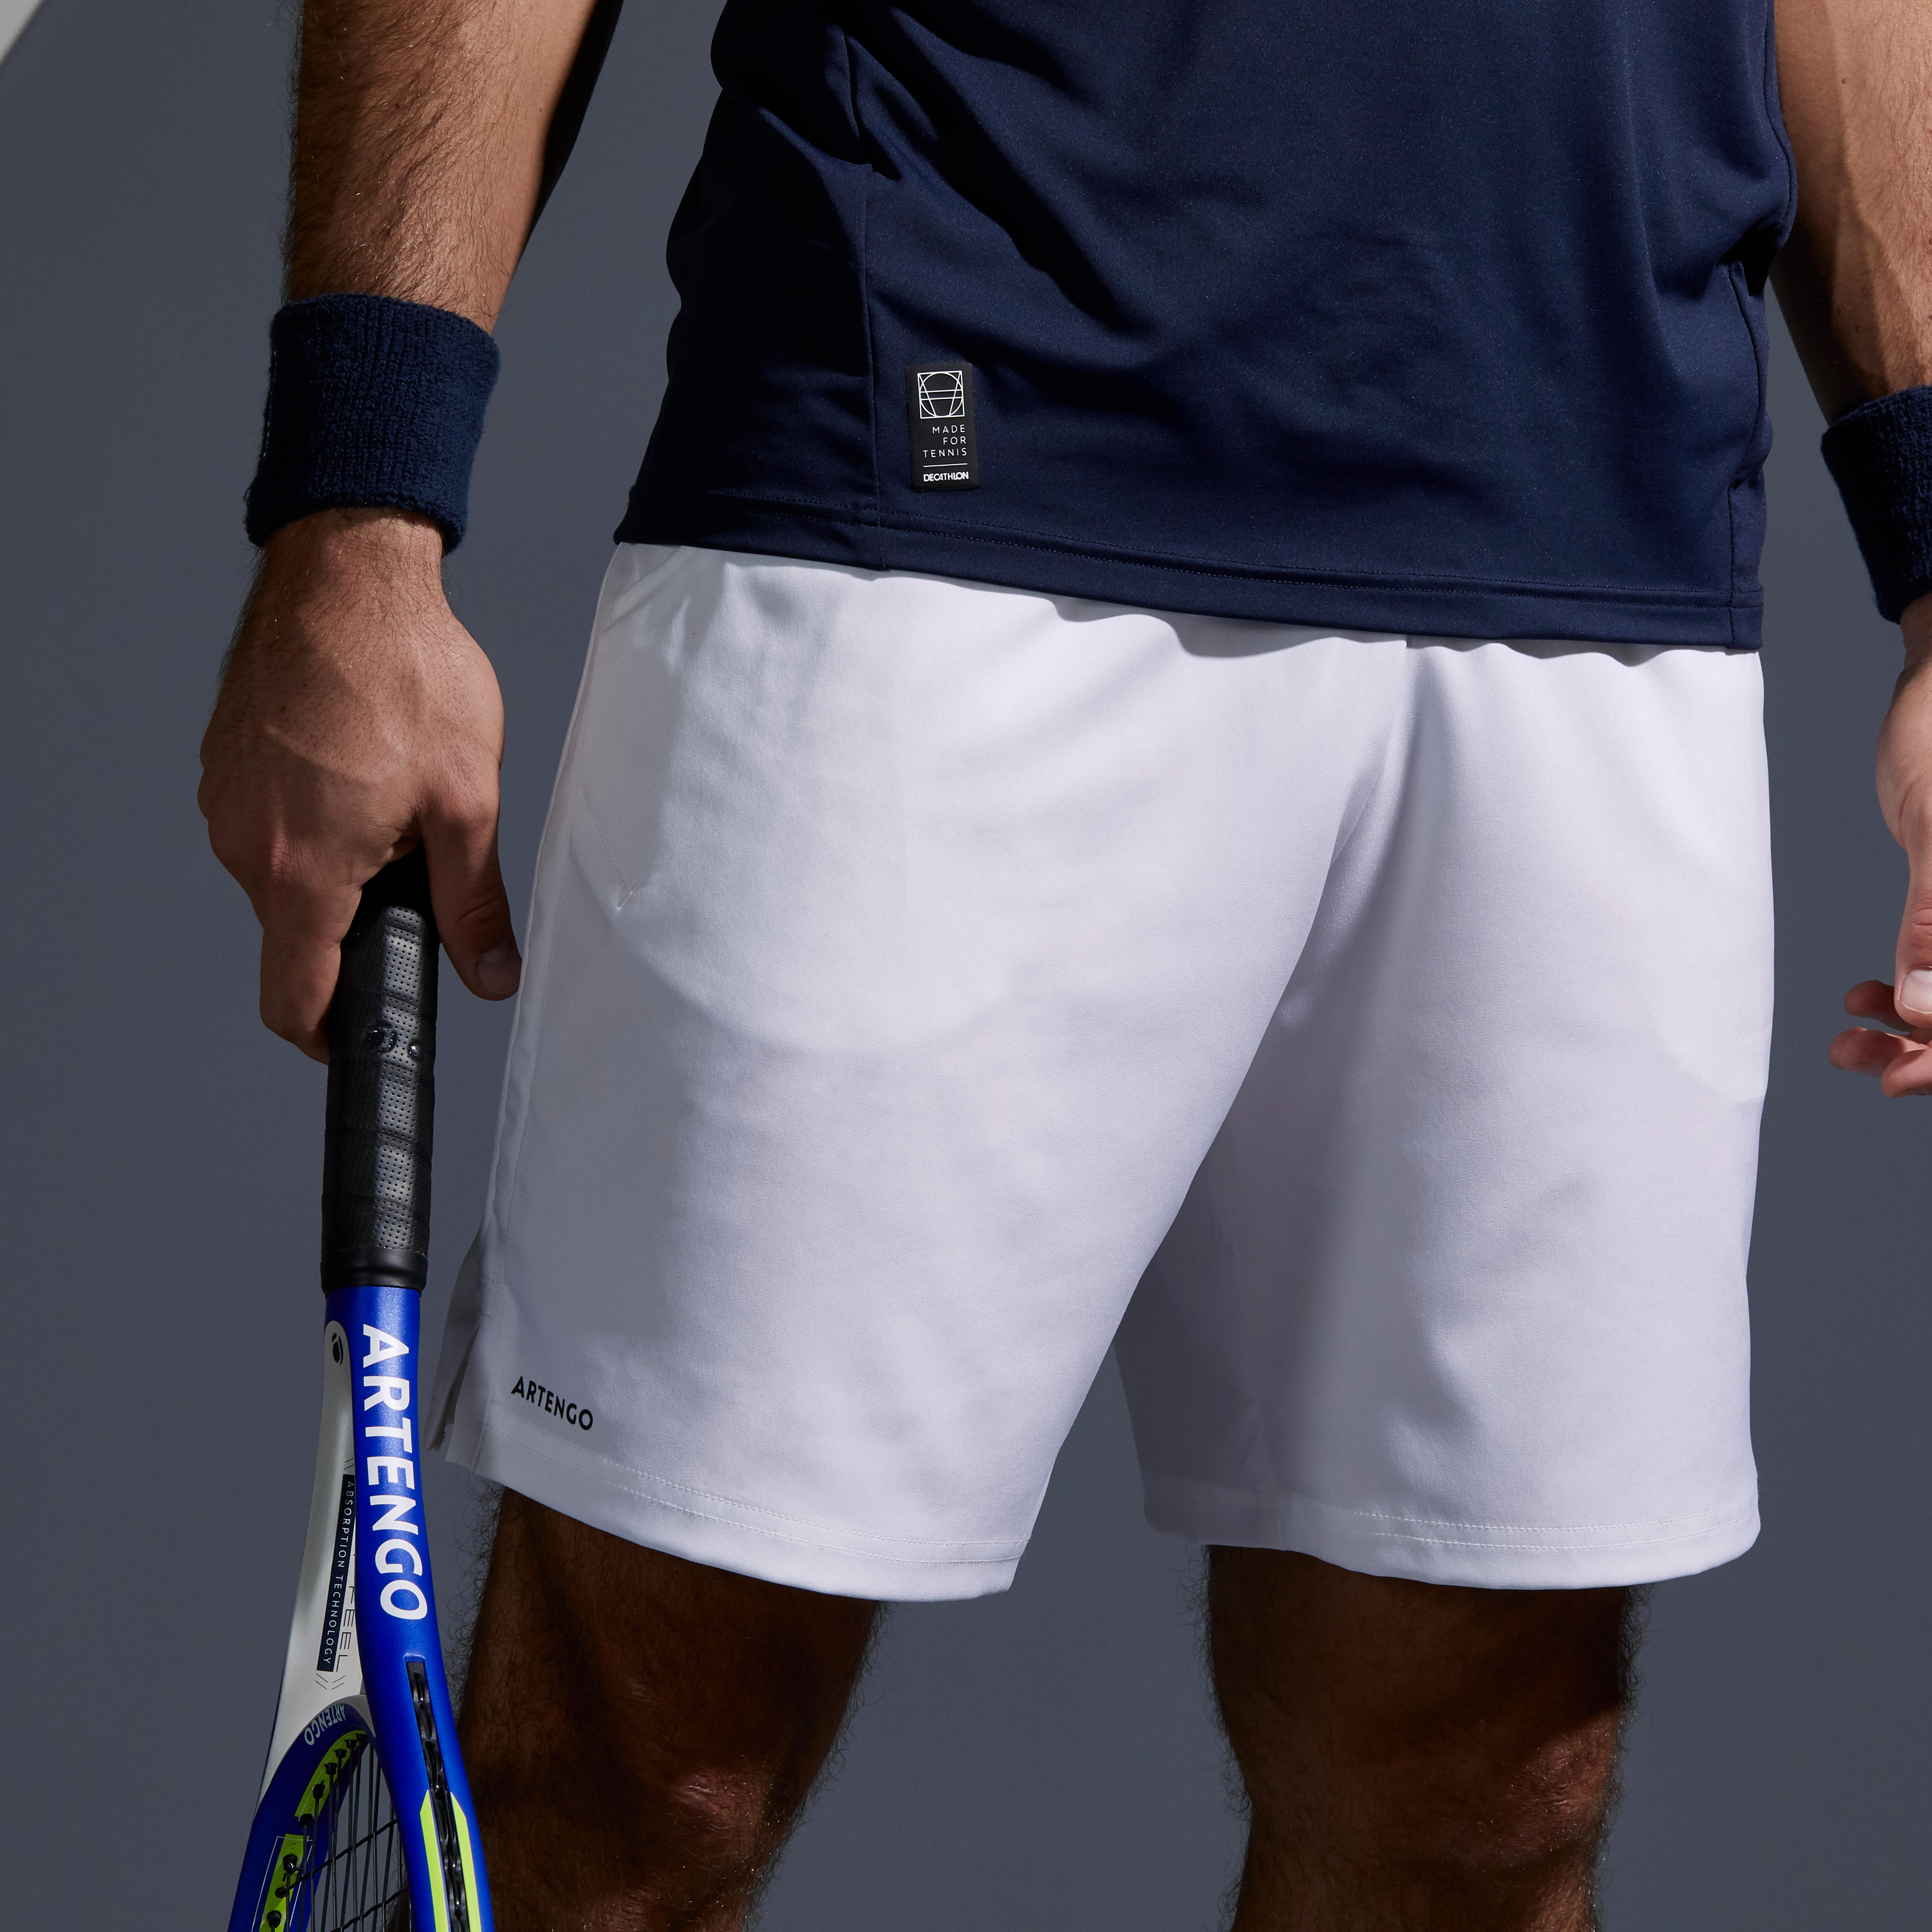 decathlon tennis clothes